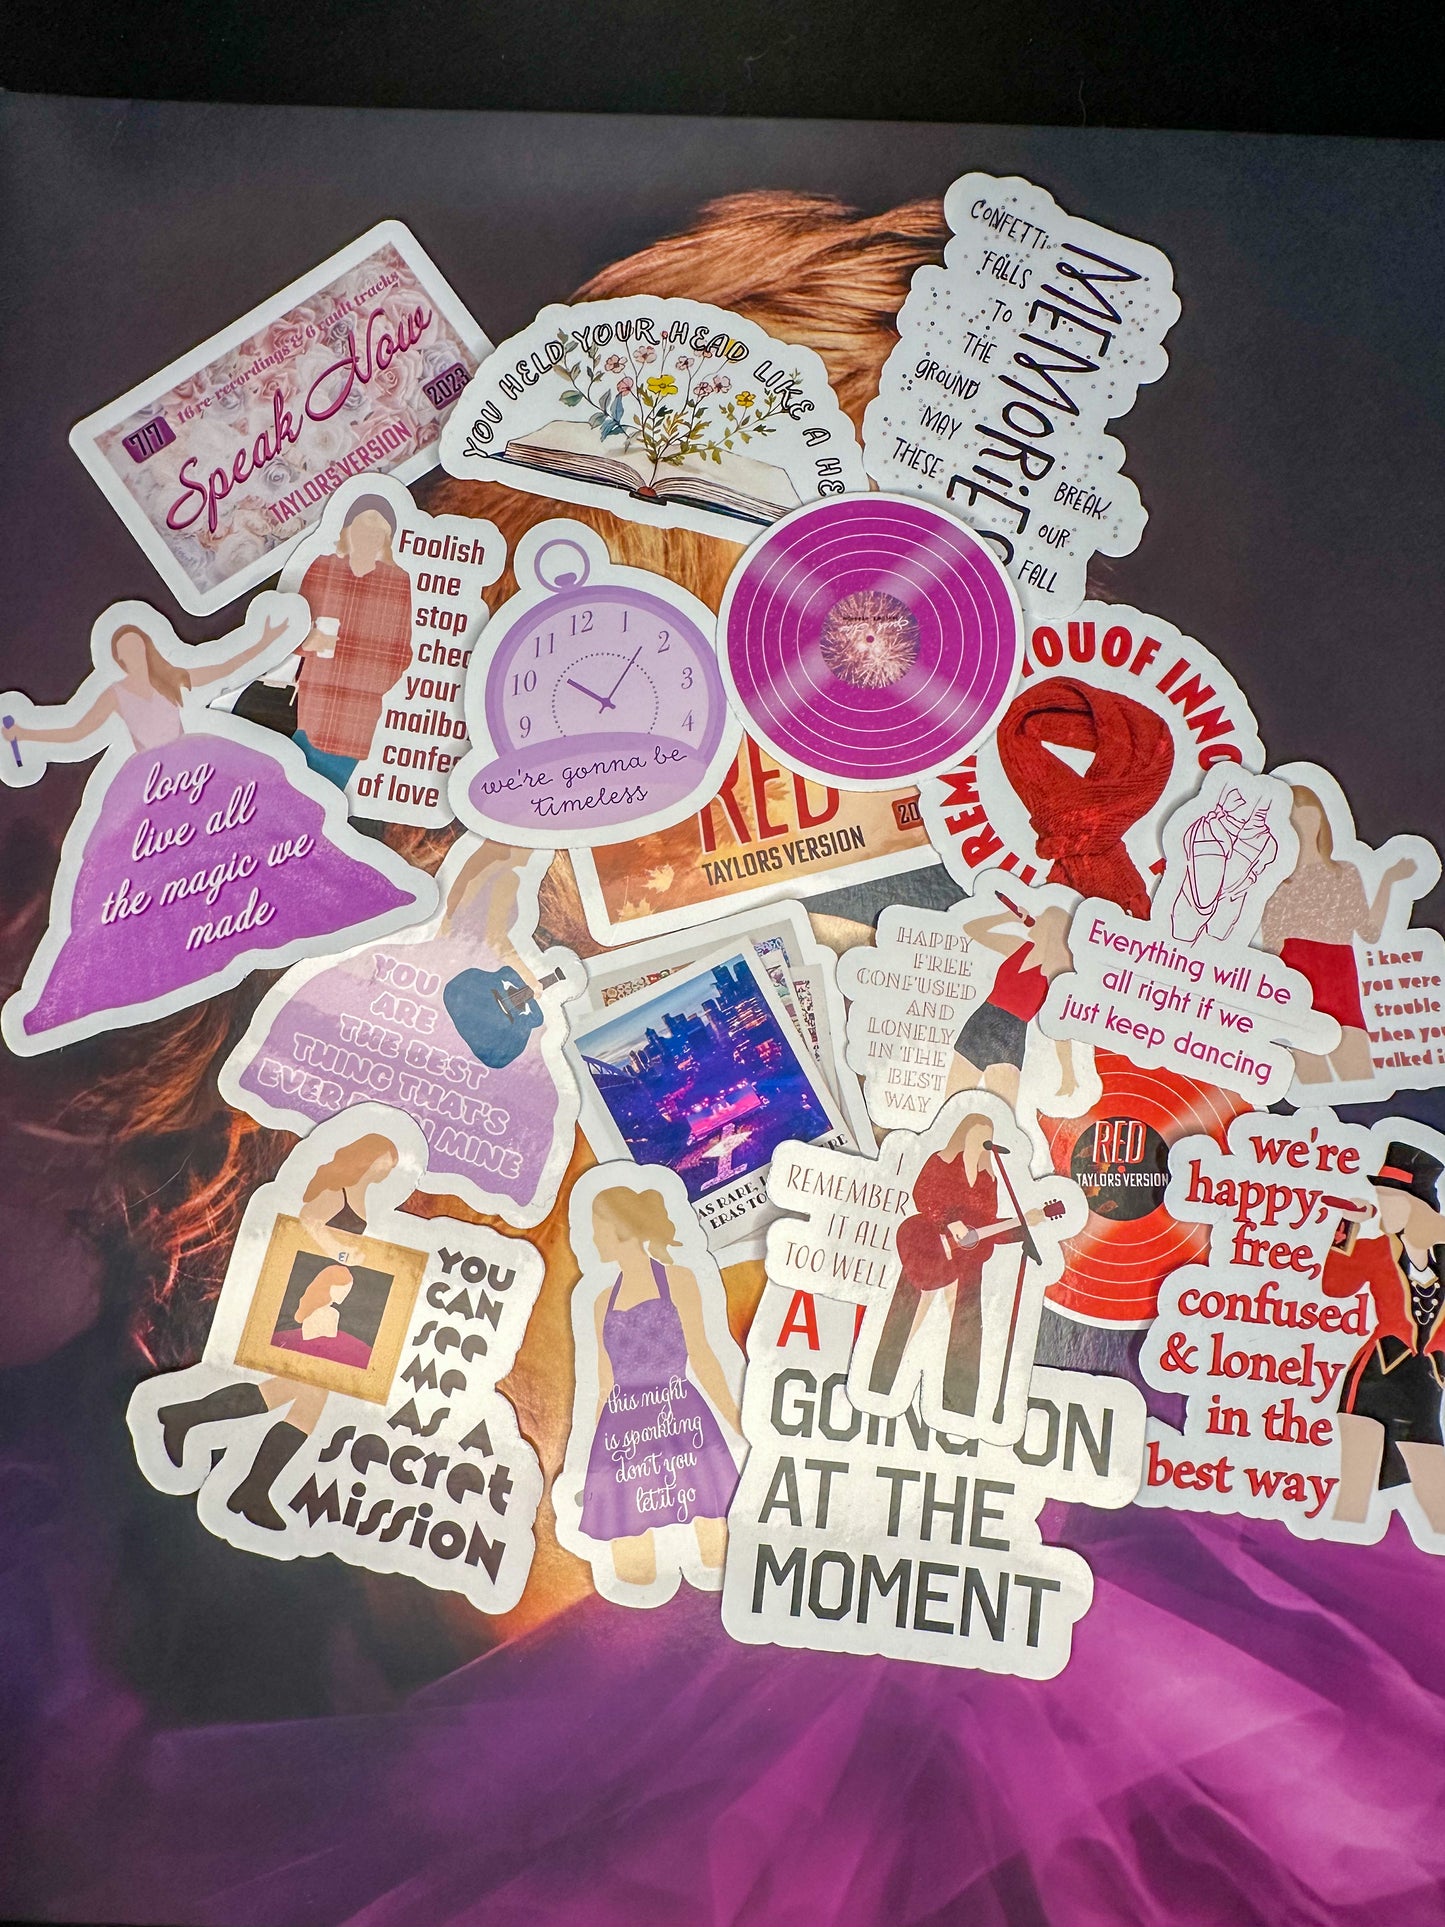 100! Swiftie Stickers Eras Tour | Taylor Swift lyrics, doodles,and more!